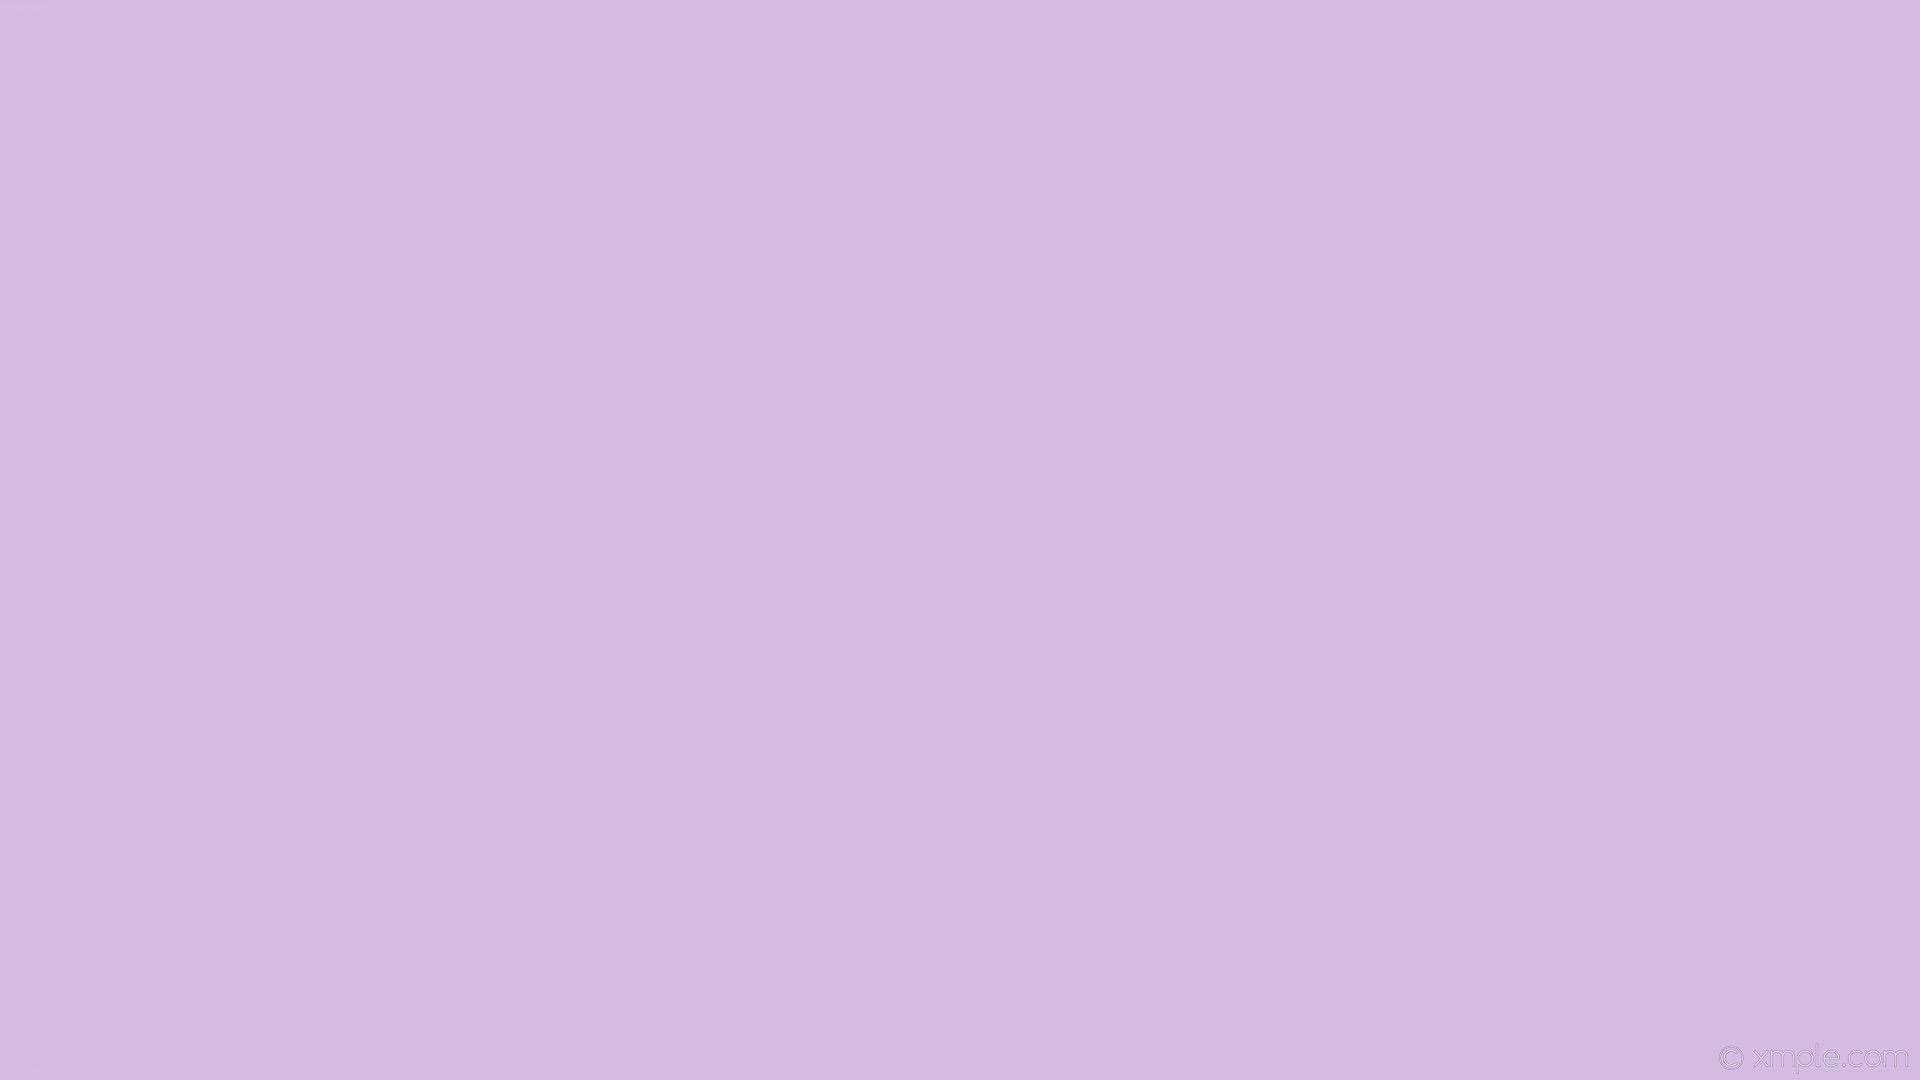 Simple Pastel Purple Aesthetic Wallpapers On Wallpaperdog